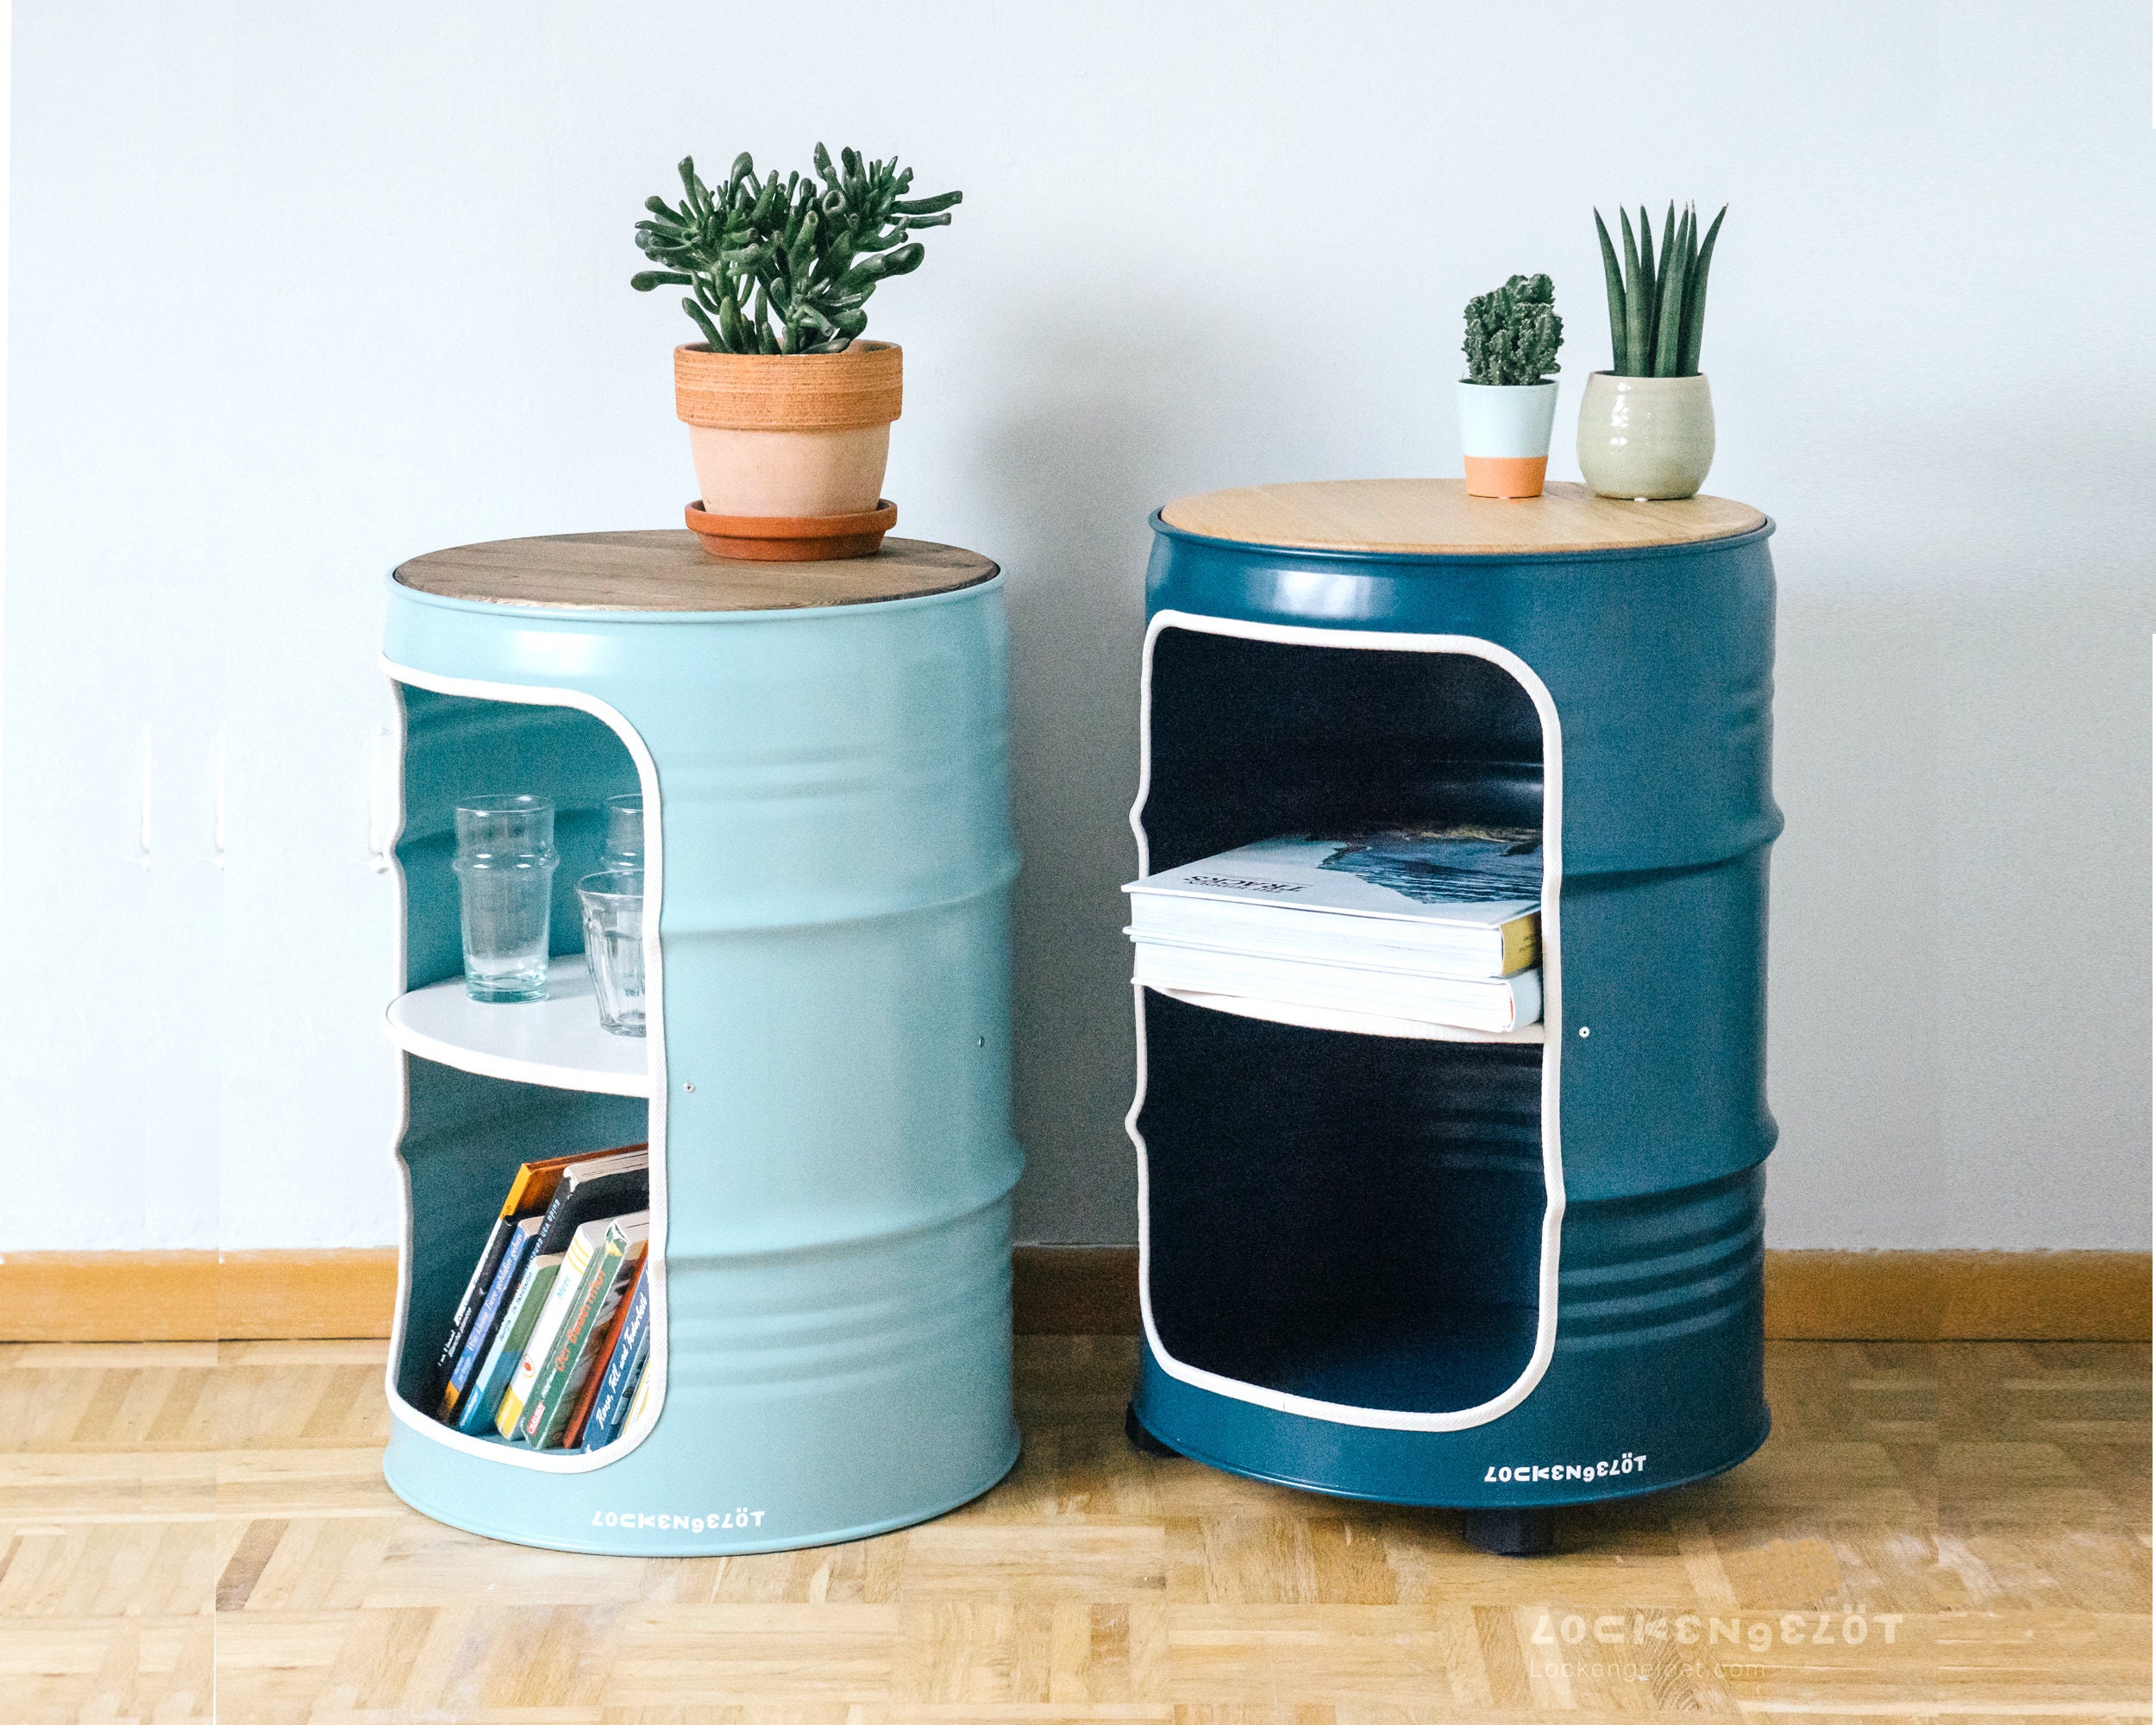 Oil drum table Nele - Tonnentumult  - unique barrel furniture